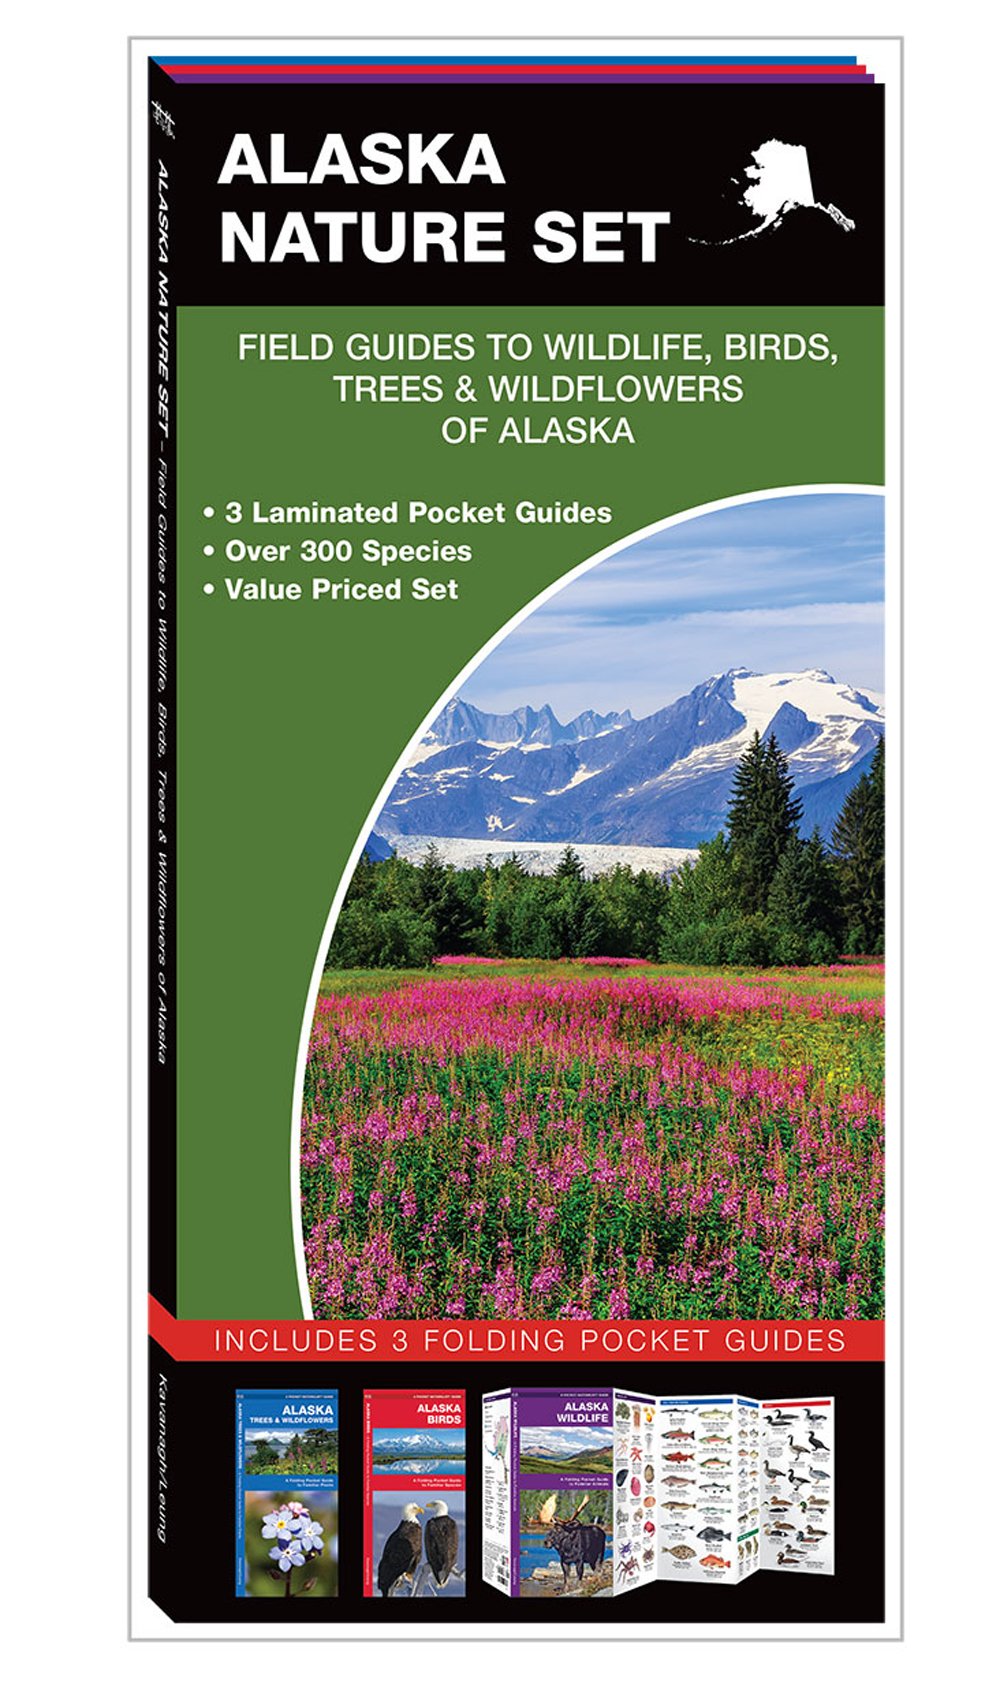 Alaska Nature Set: Field Guides to Wildlife, Birds, Trees & Wildflowers (Pocket Naturalist® Guide Set)